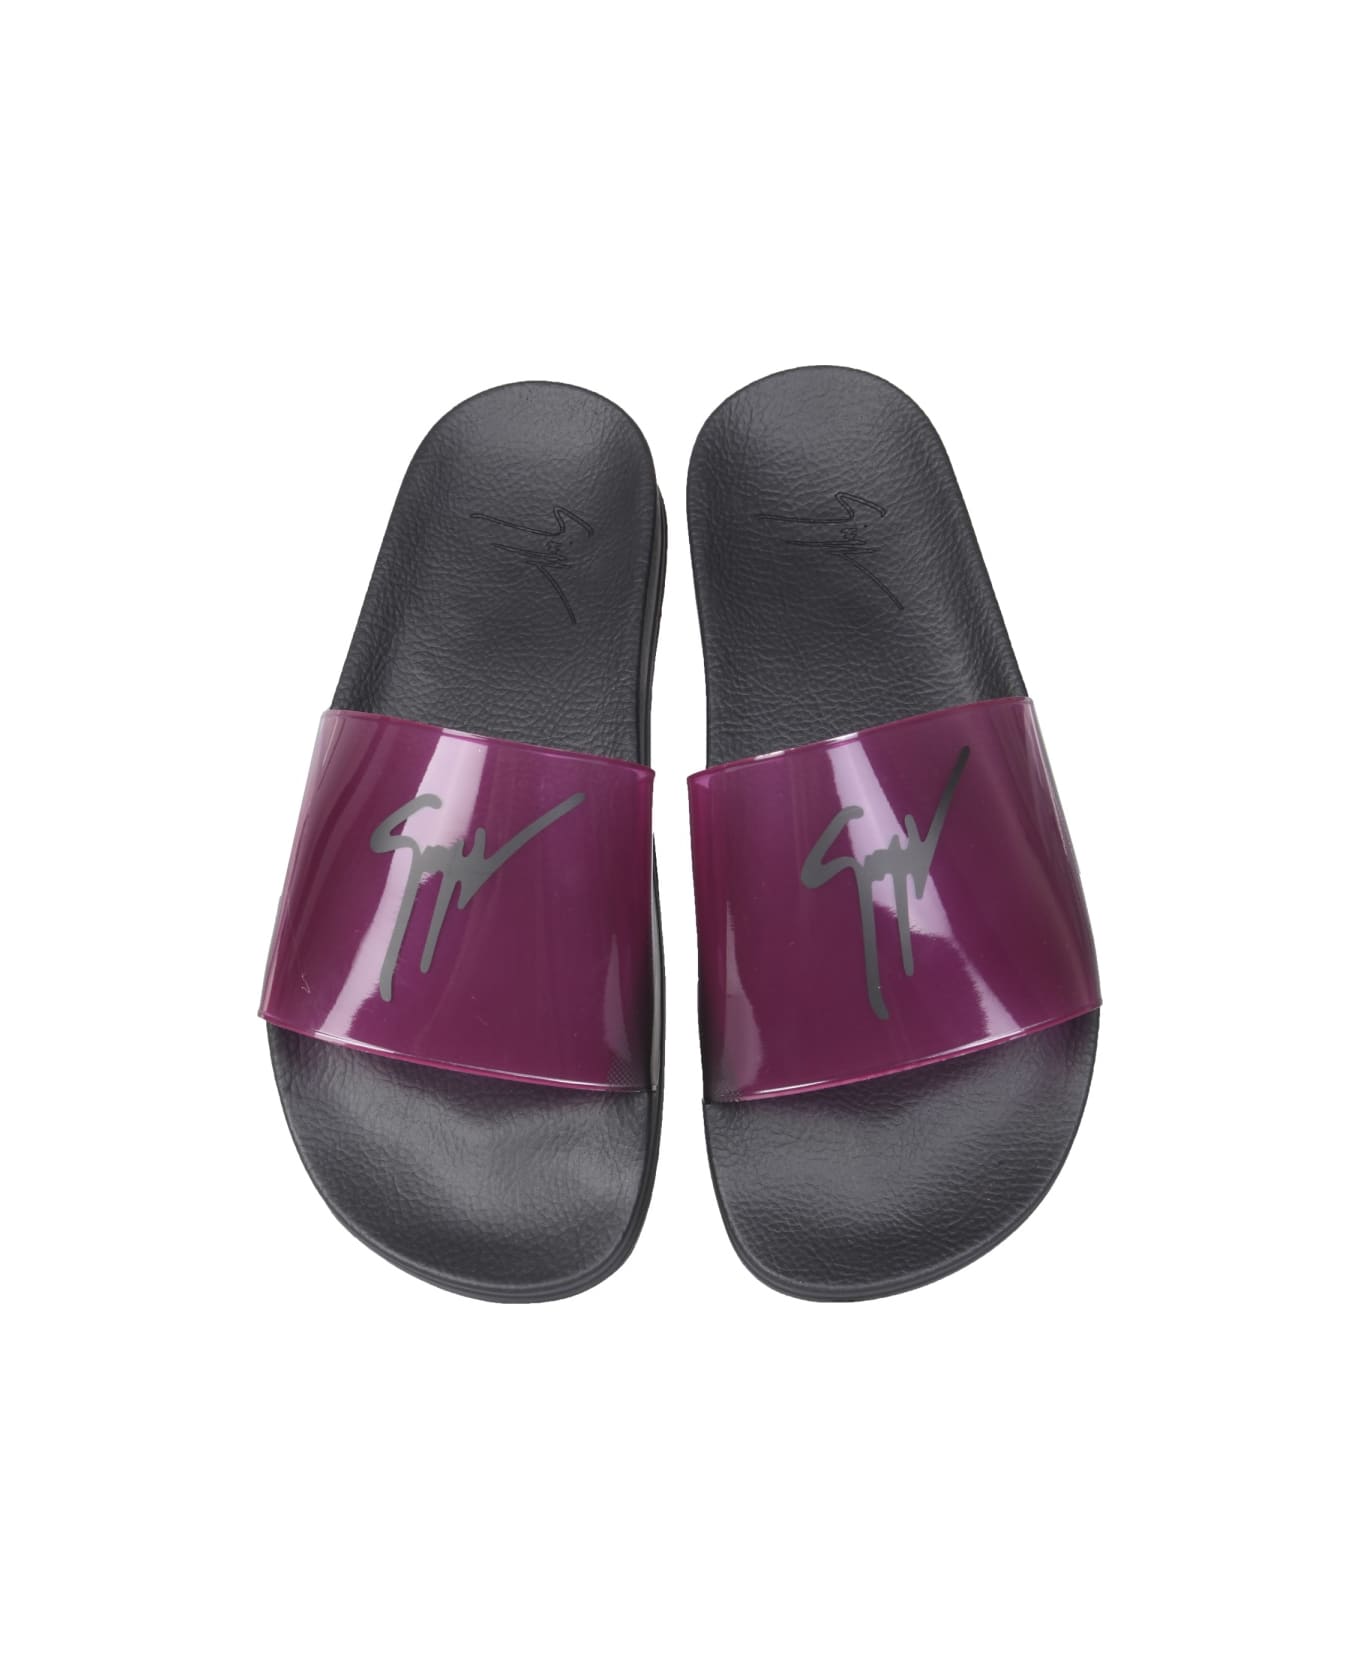 Giuseppe Zanotti Slide Sandals With Logo - FUCHSIA